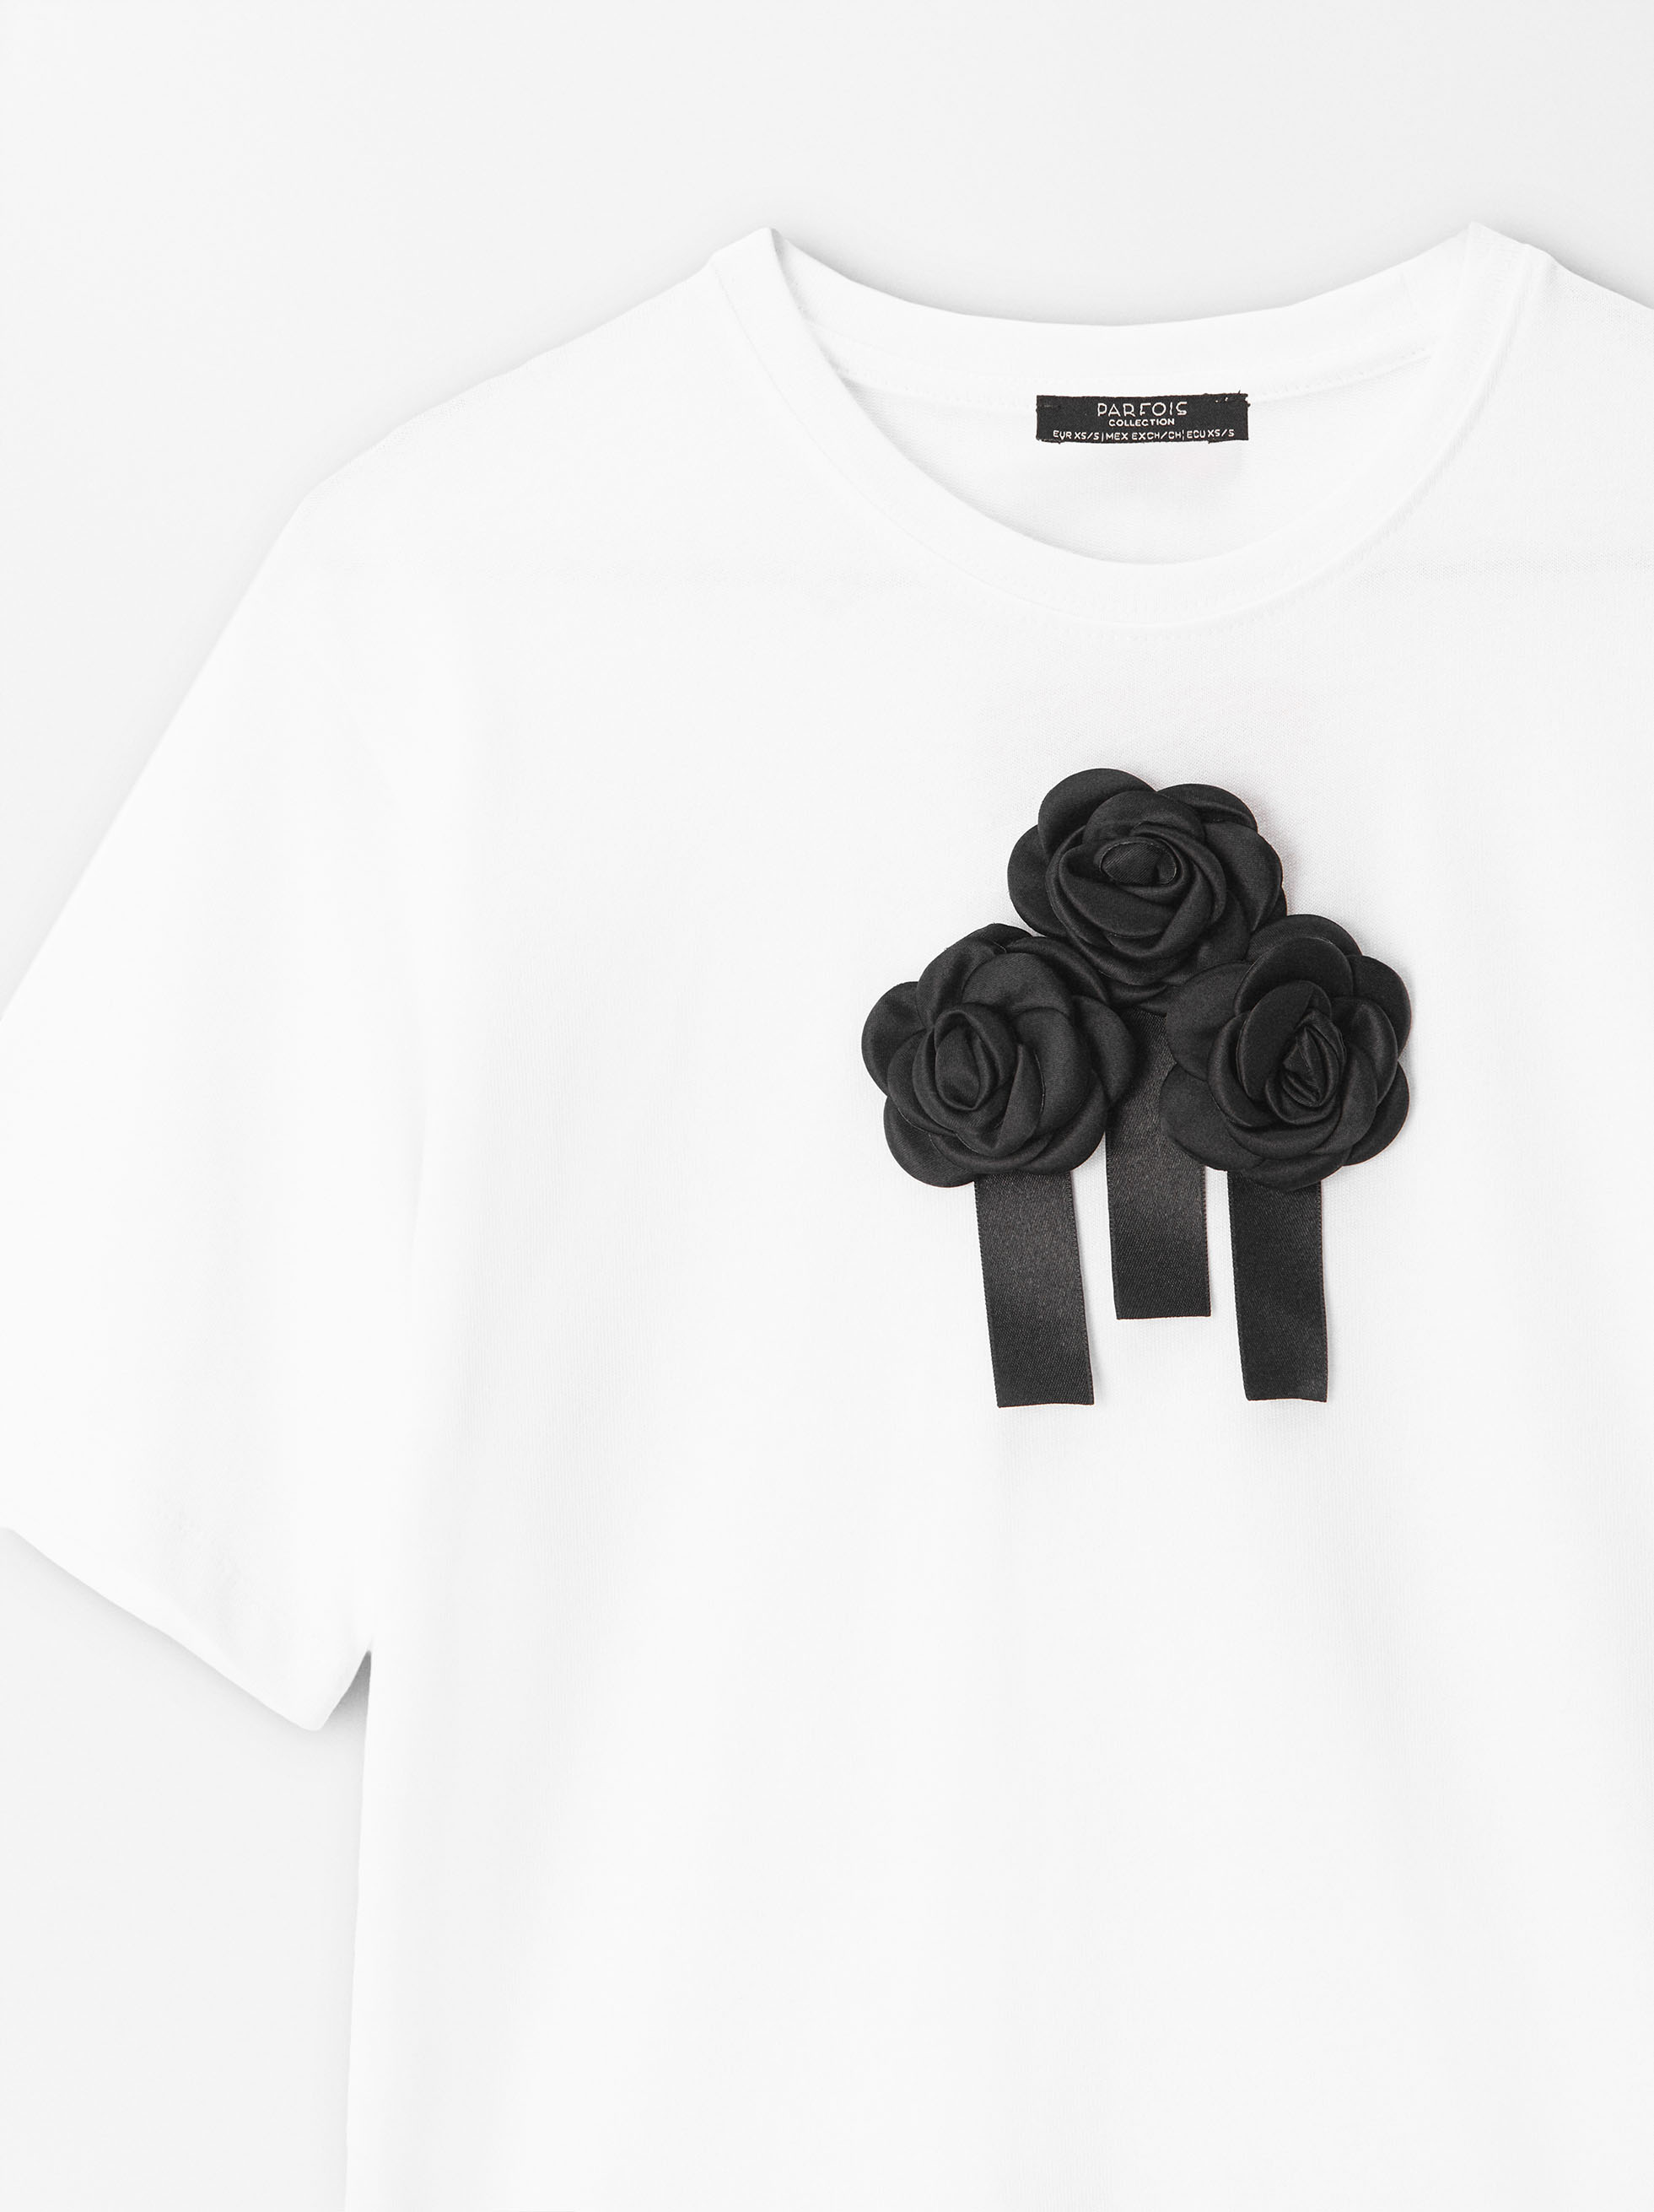 Exclusivo Online - Camiseta 100% Algodón Flores image number 3.0